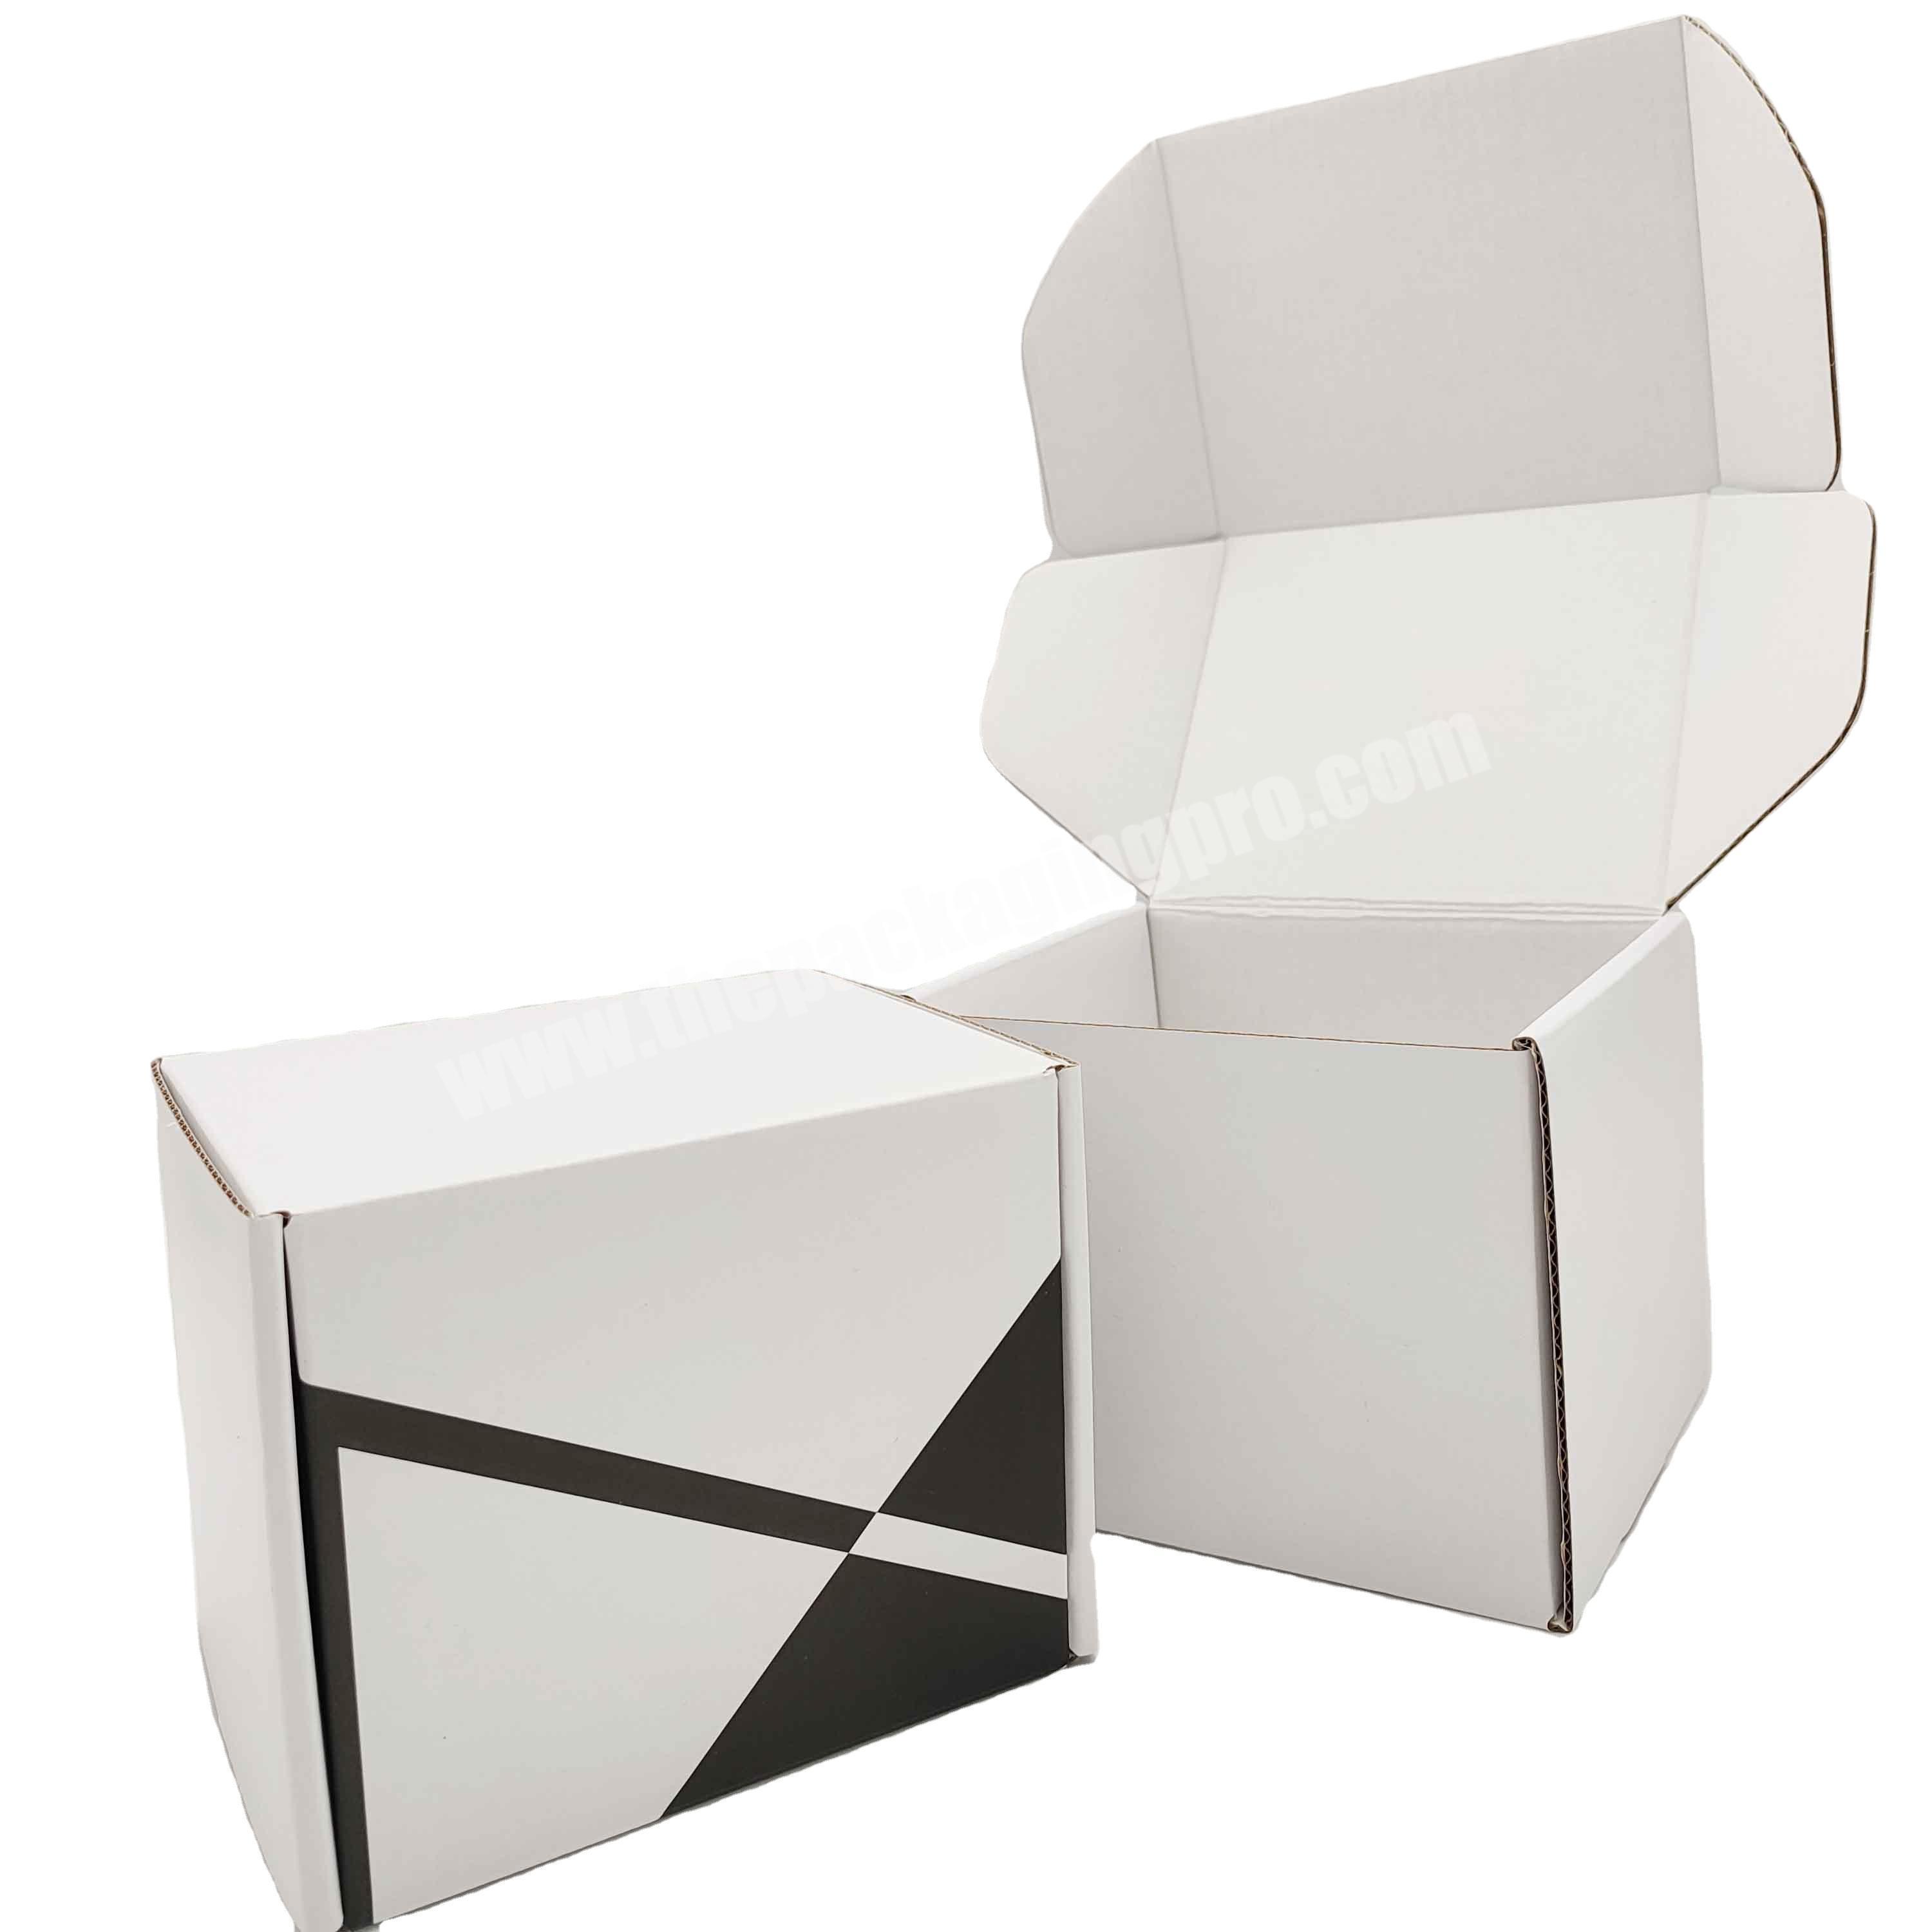 Recycled shipping box custom clothing packaging box white gift box